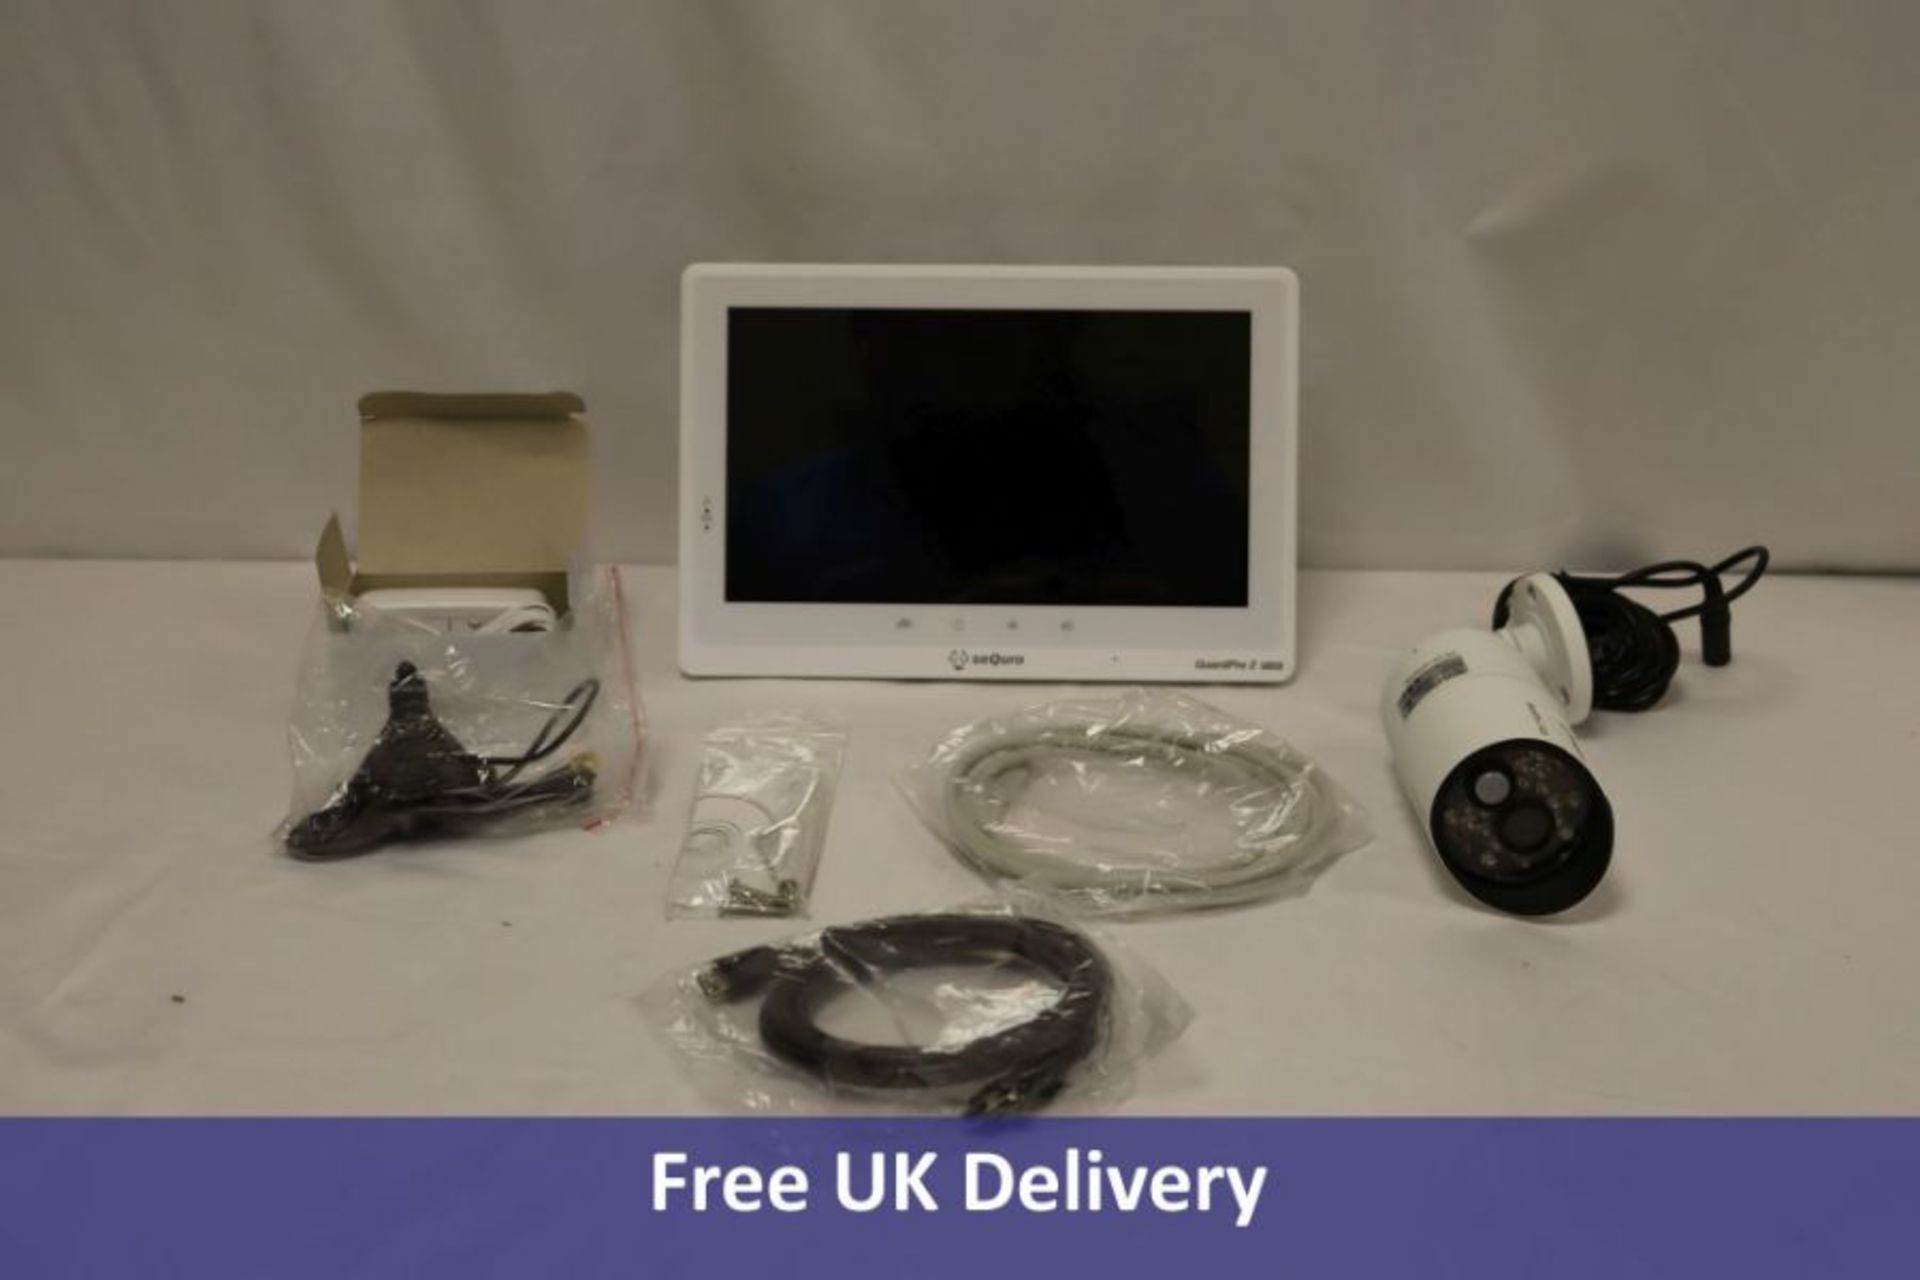 Sequro GuardPro2 Home Surveillance DVR Kit. Ex demo item, not tested